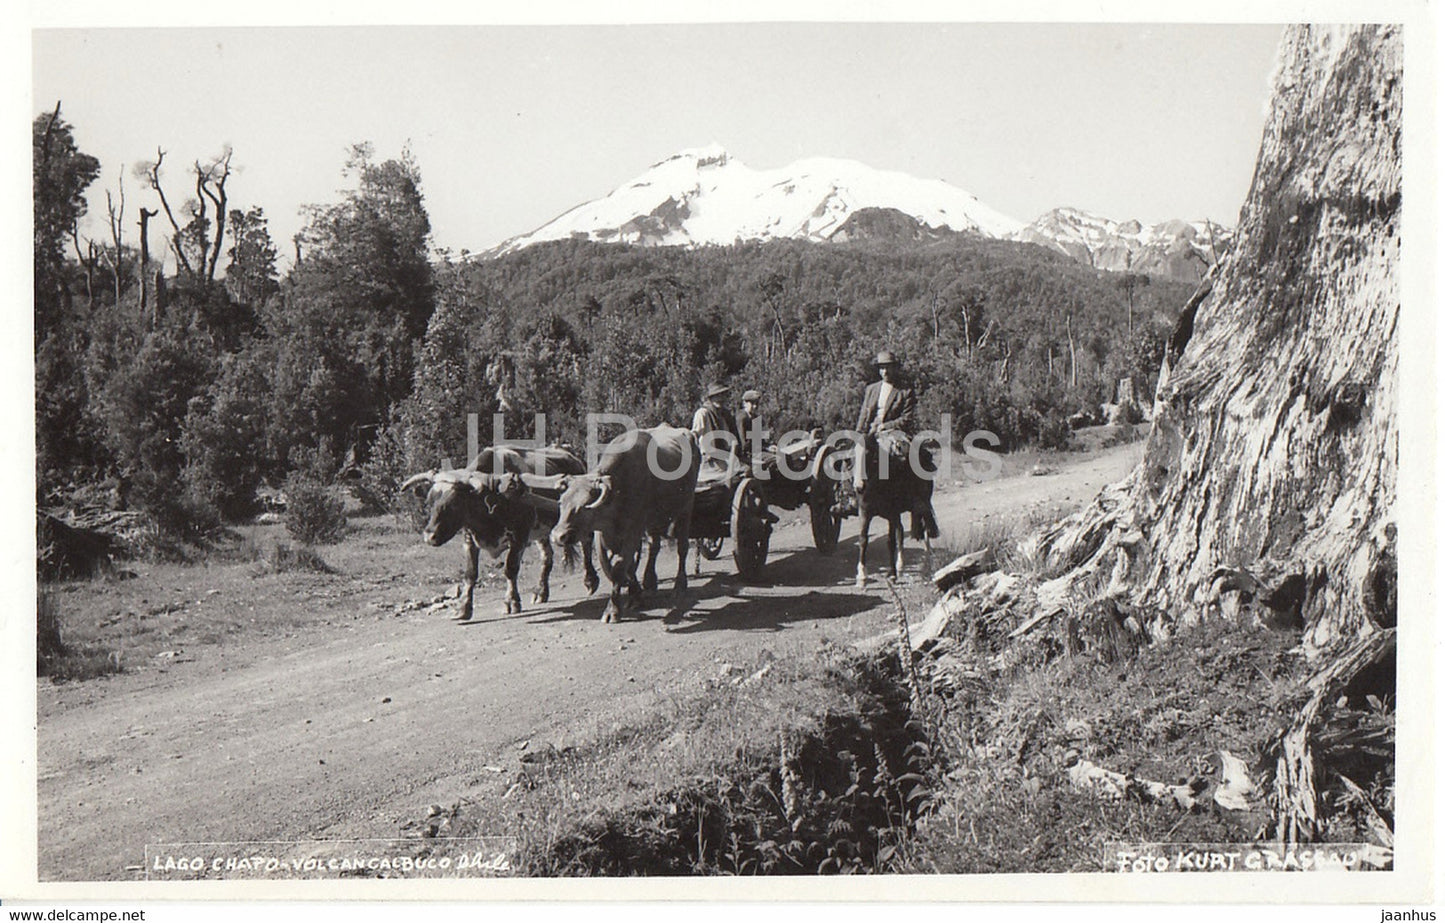 Lago Chapo - Volcan Calbuco - bull carriage - old postcard - 1955 - Chile - used - JH Postcards